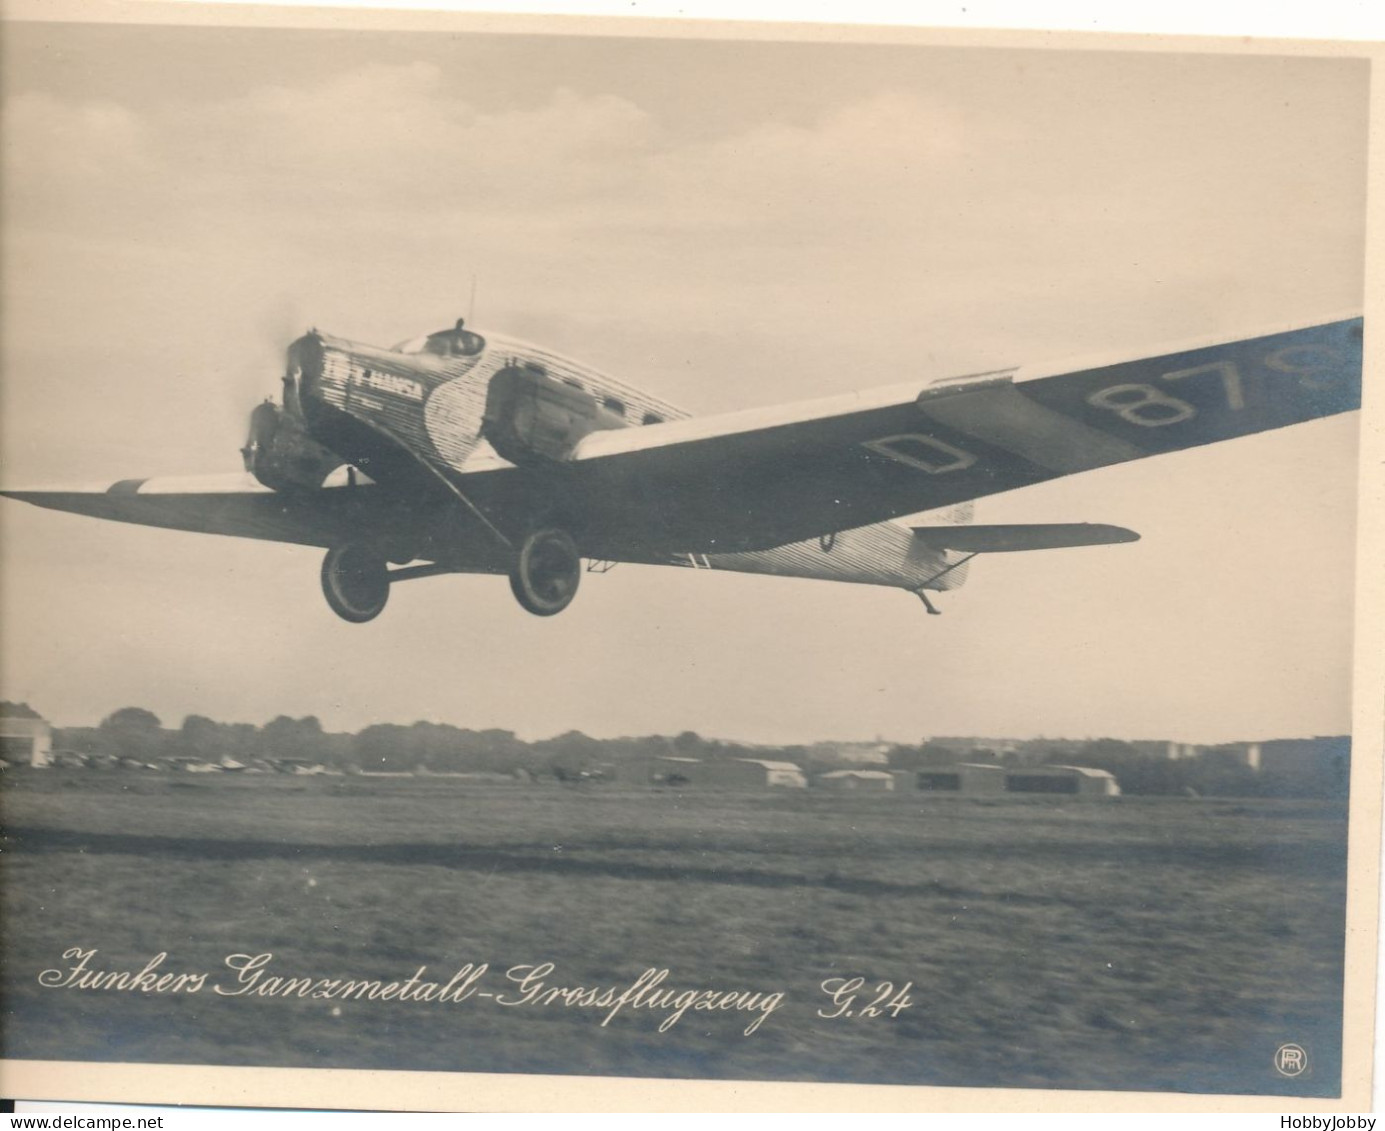 Photograph: Junker Ganzmetall Grossflugzeug G. 24 In PERFECTER ZUSTAND - Ungebraucht - 1919-1938: Between Wars